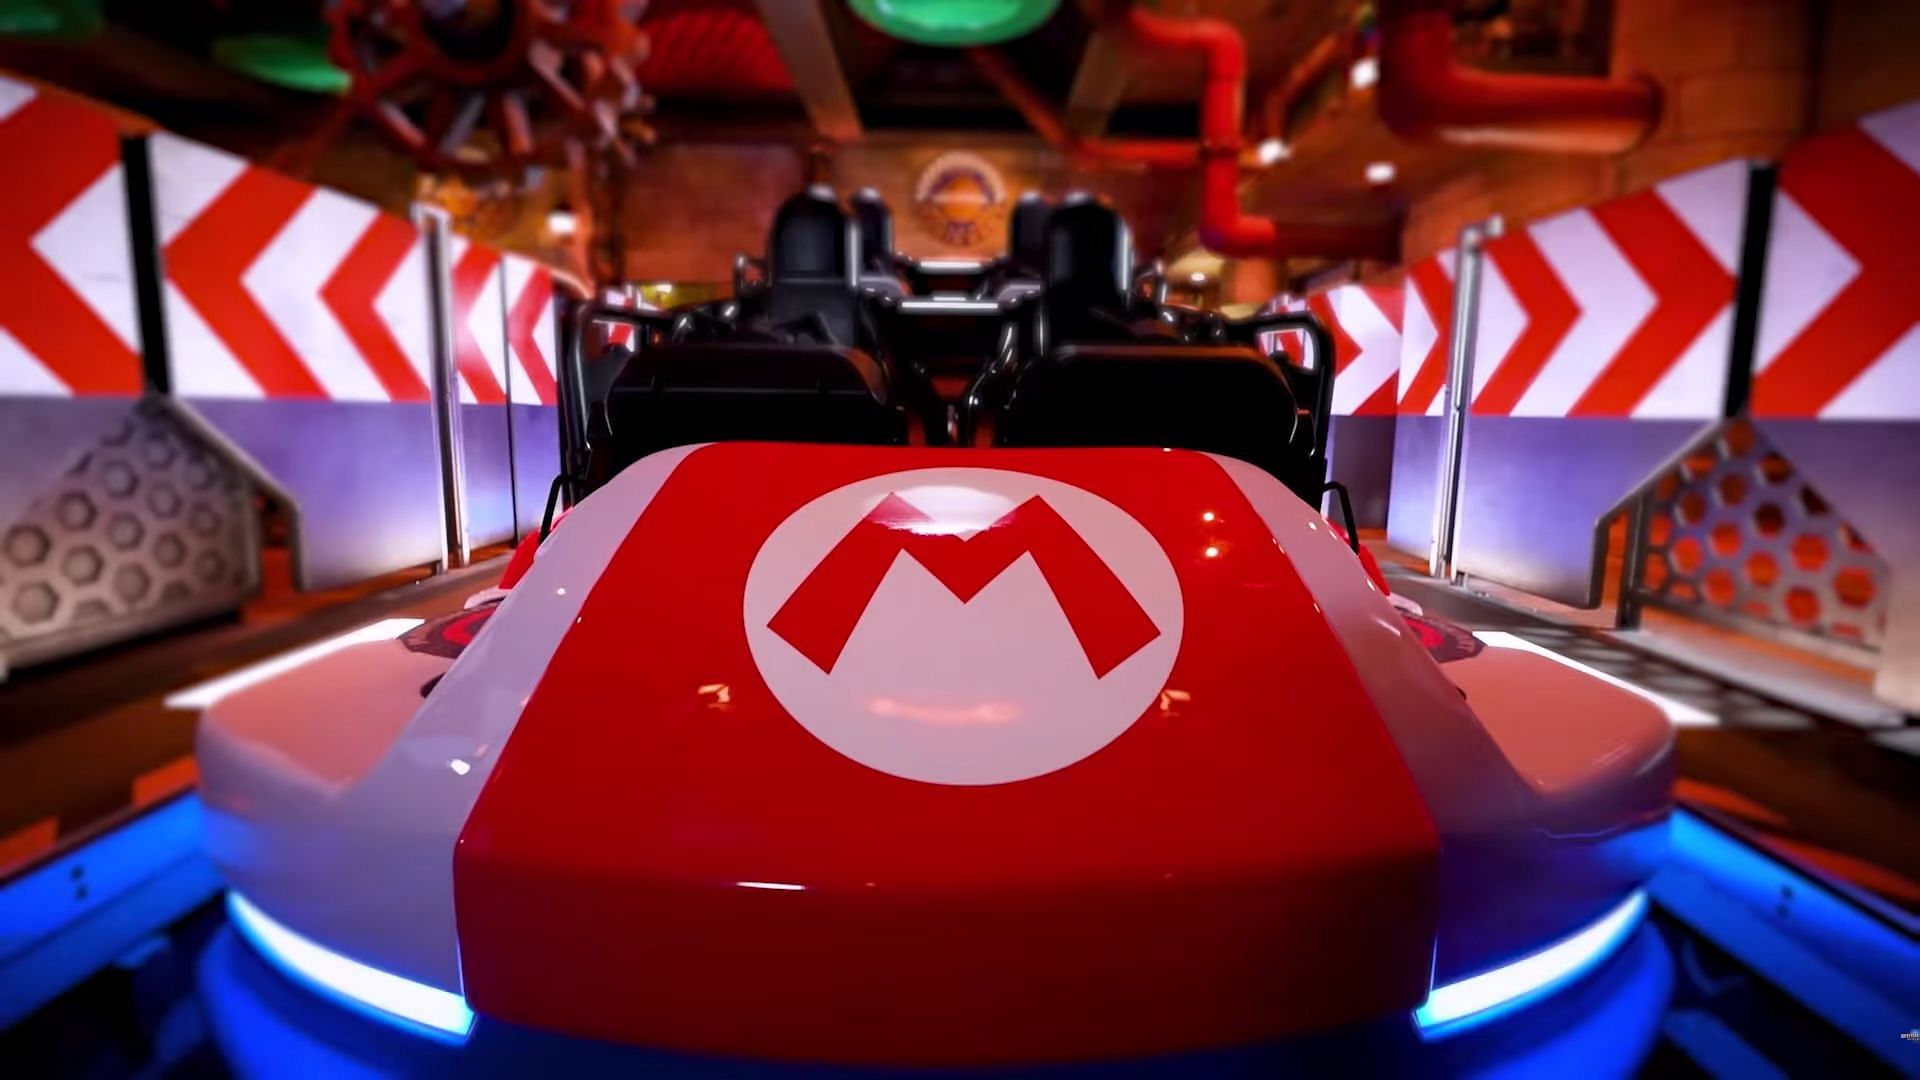 Mario Kart ride size restriction sparks debates online (Image via YouTube/@Universal Studios Hollywood)